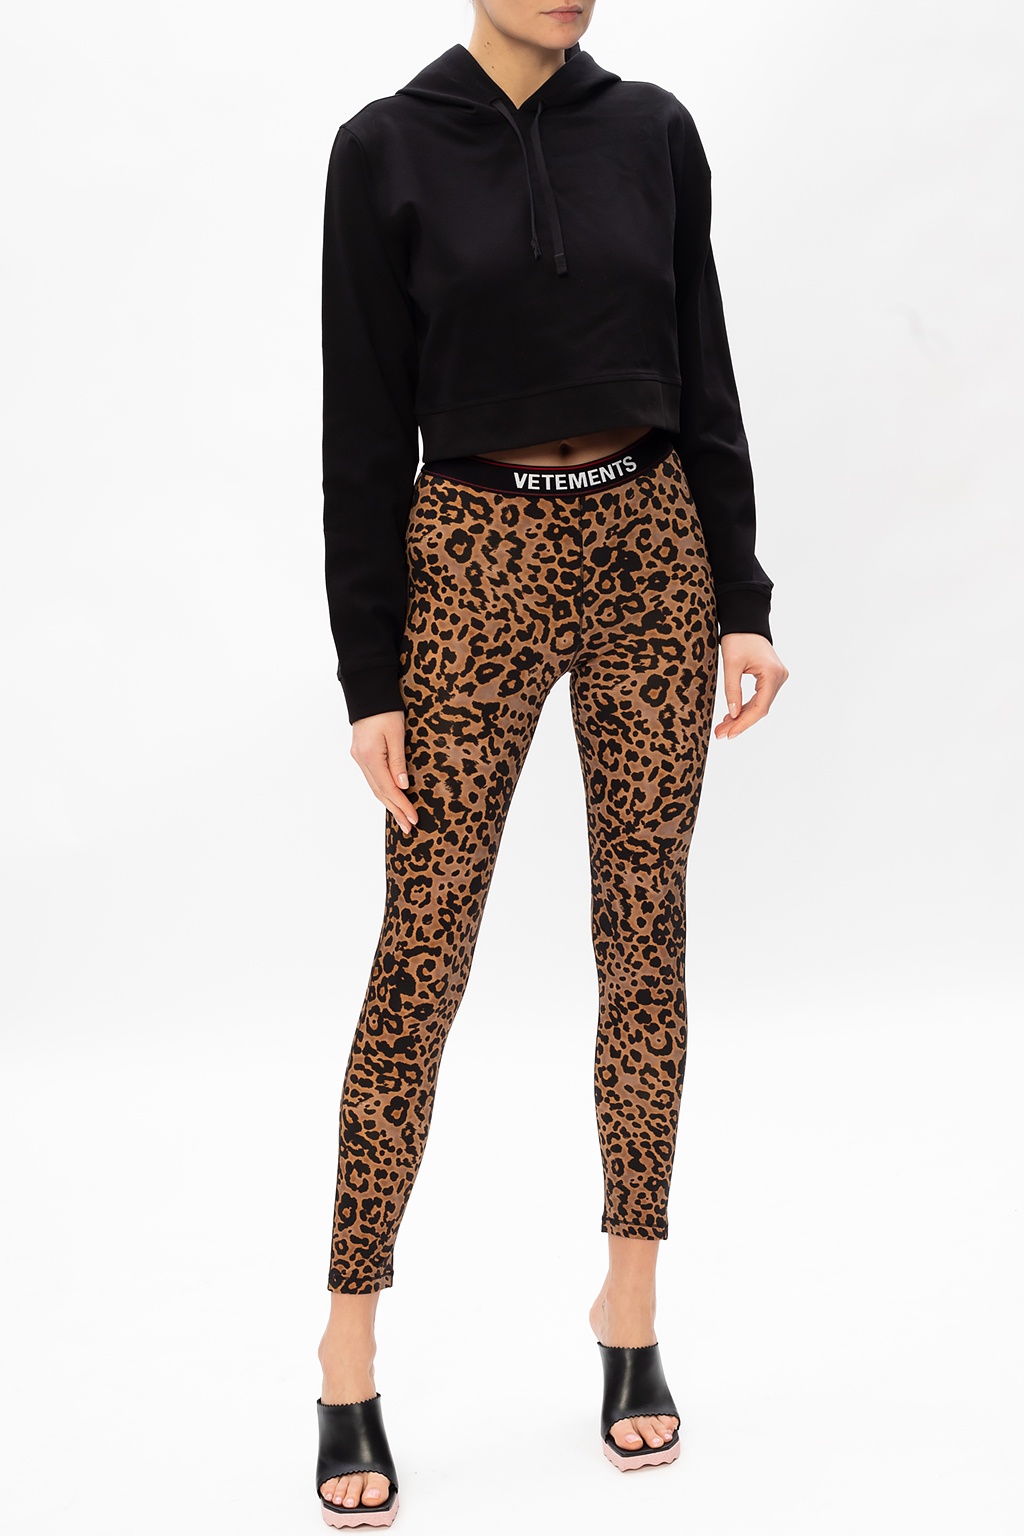 Women's Clothing - VETEMENTS Animal - IetpShops, printed leggings